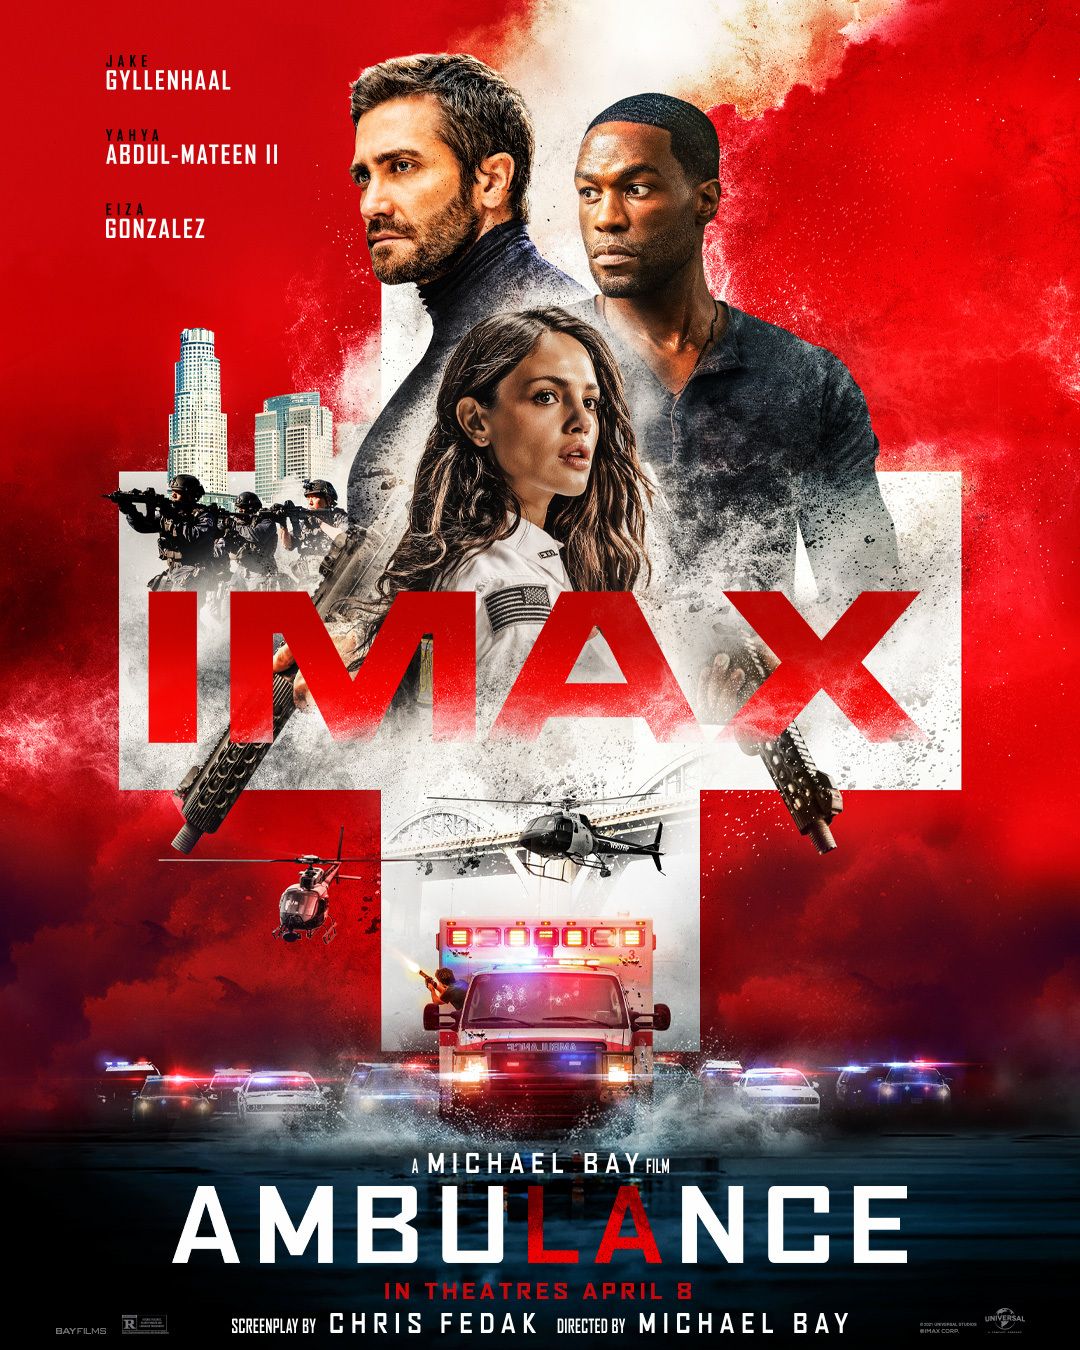 Ambulance movie IMAX poster full